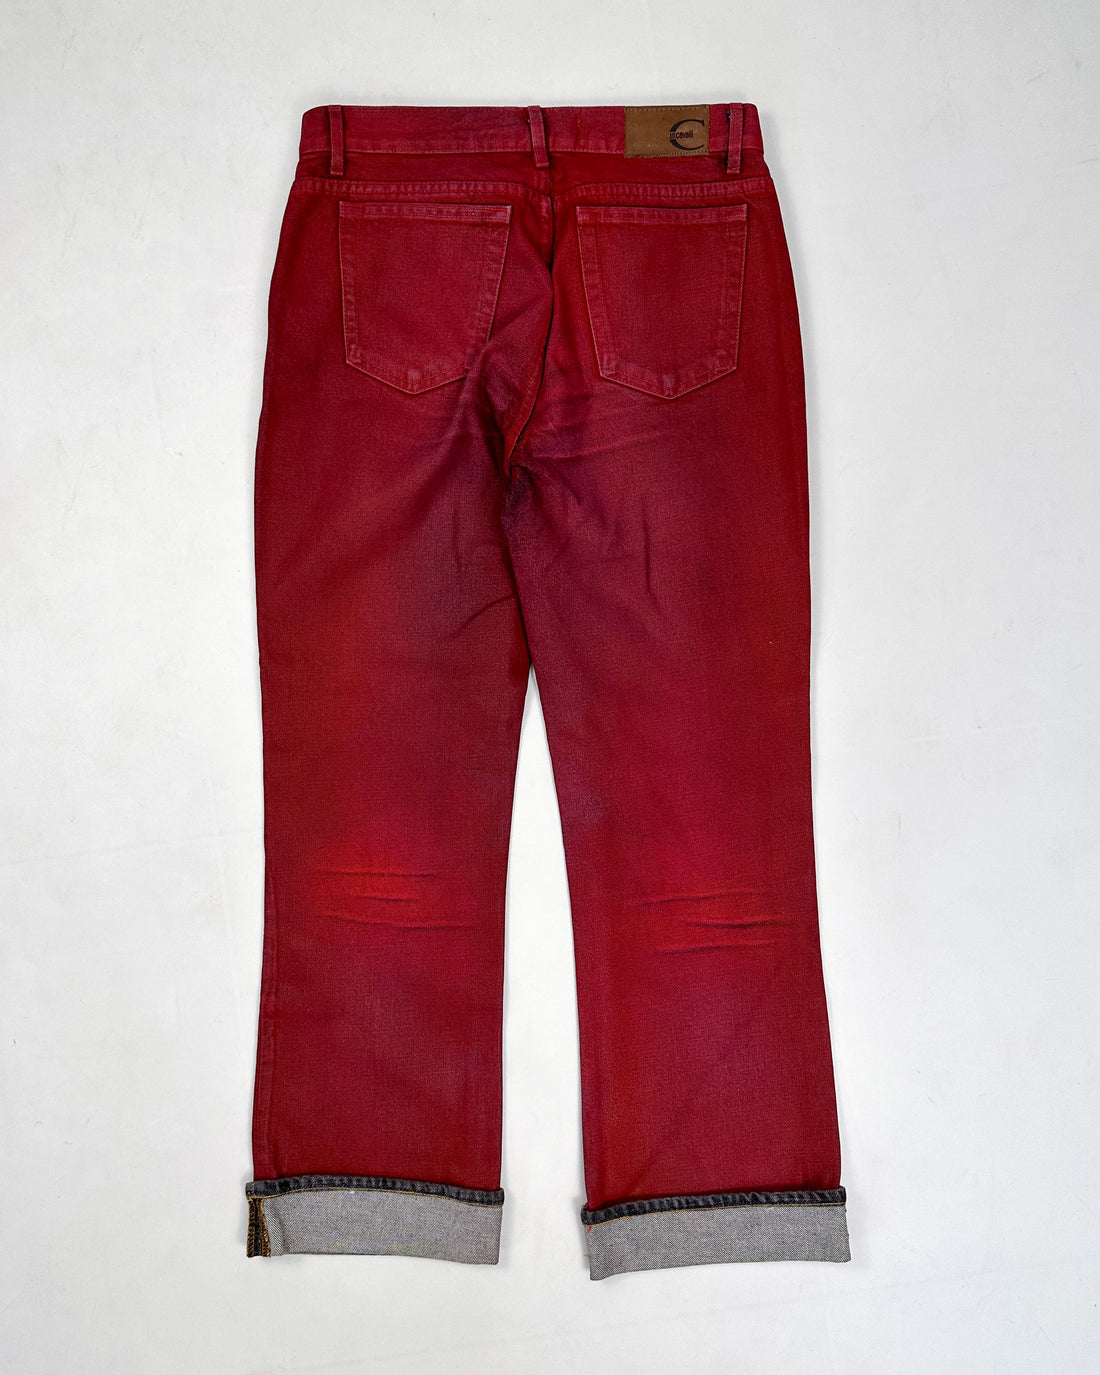 Roberto Cavalli Red Painted Over Denim Pants 2000's